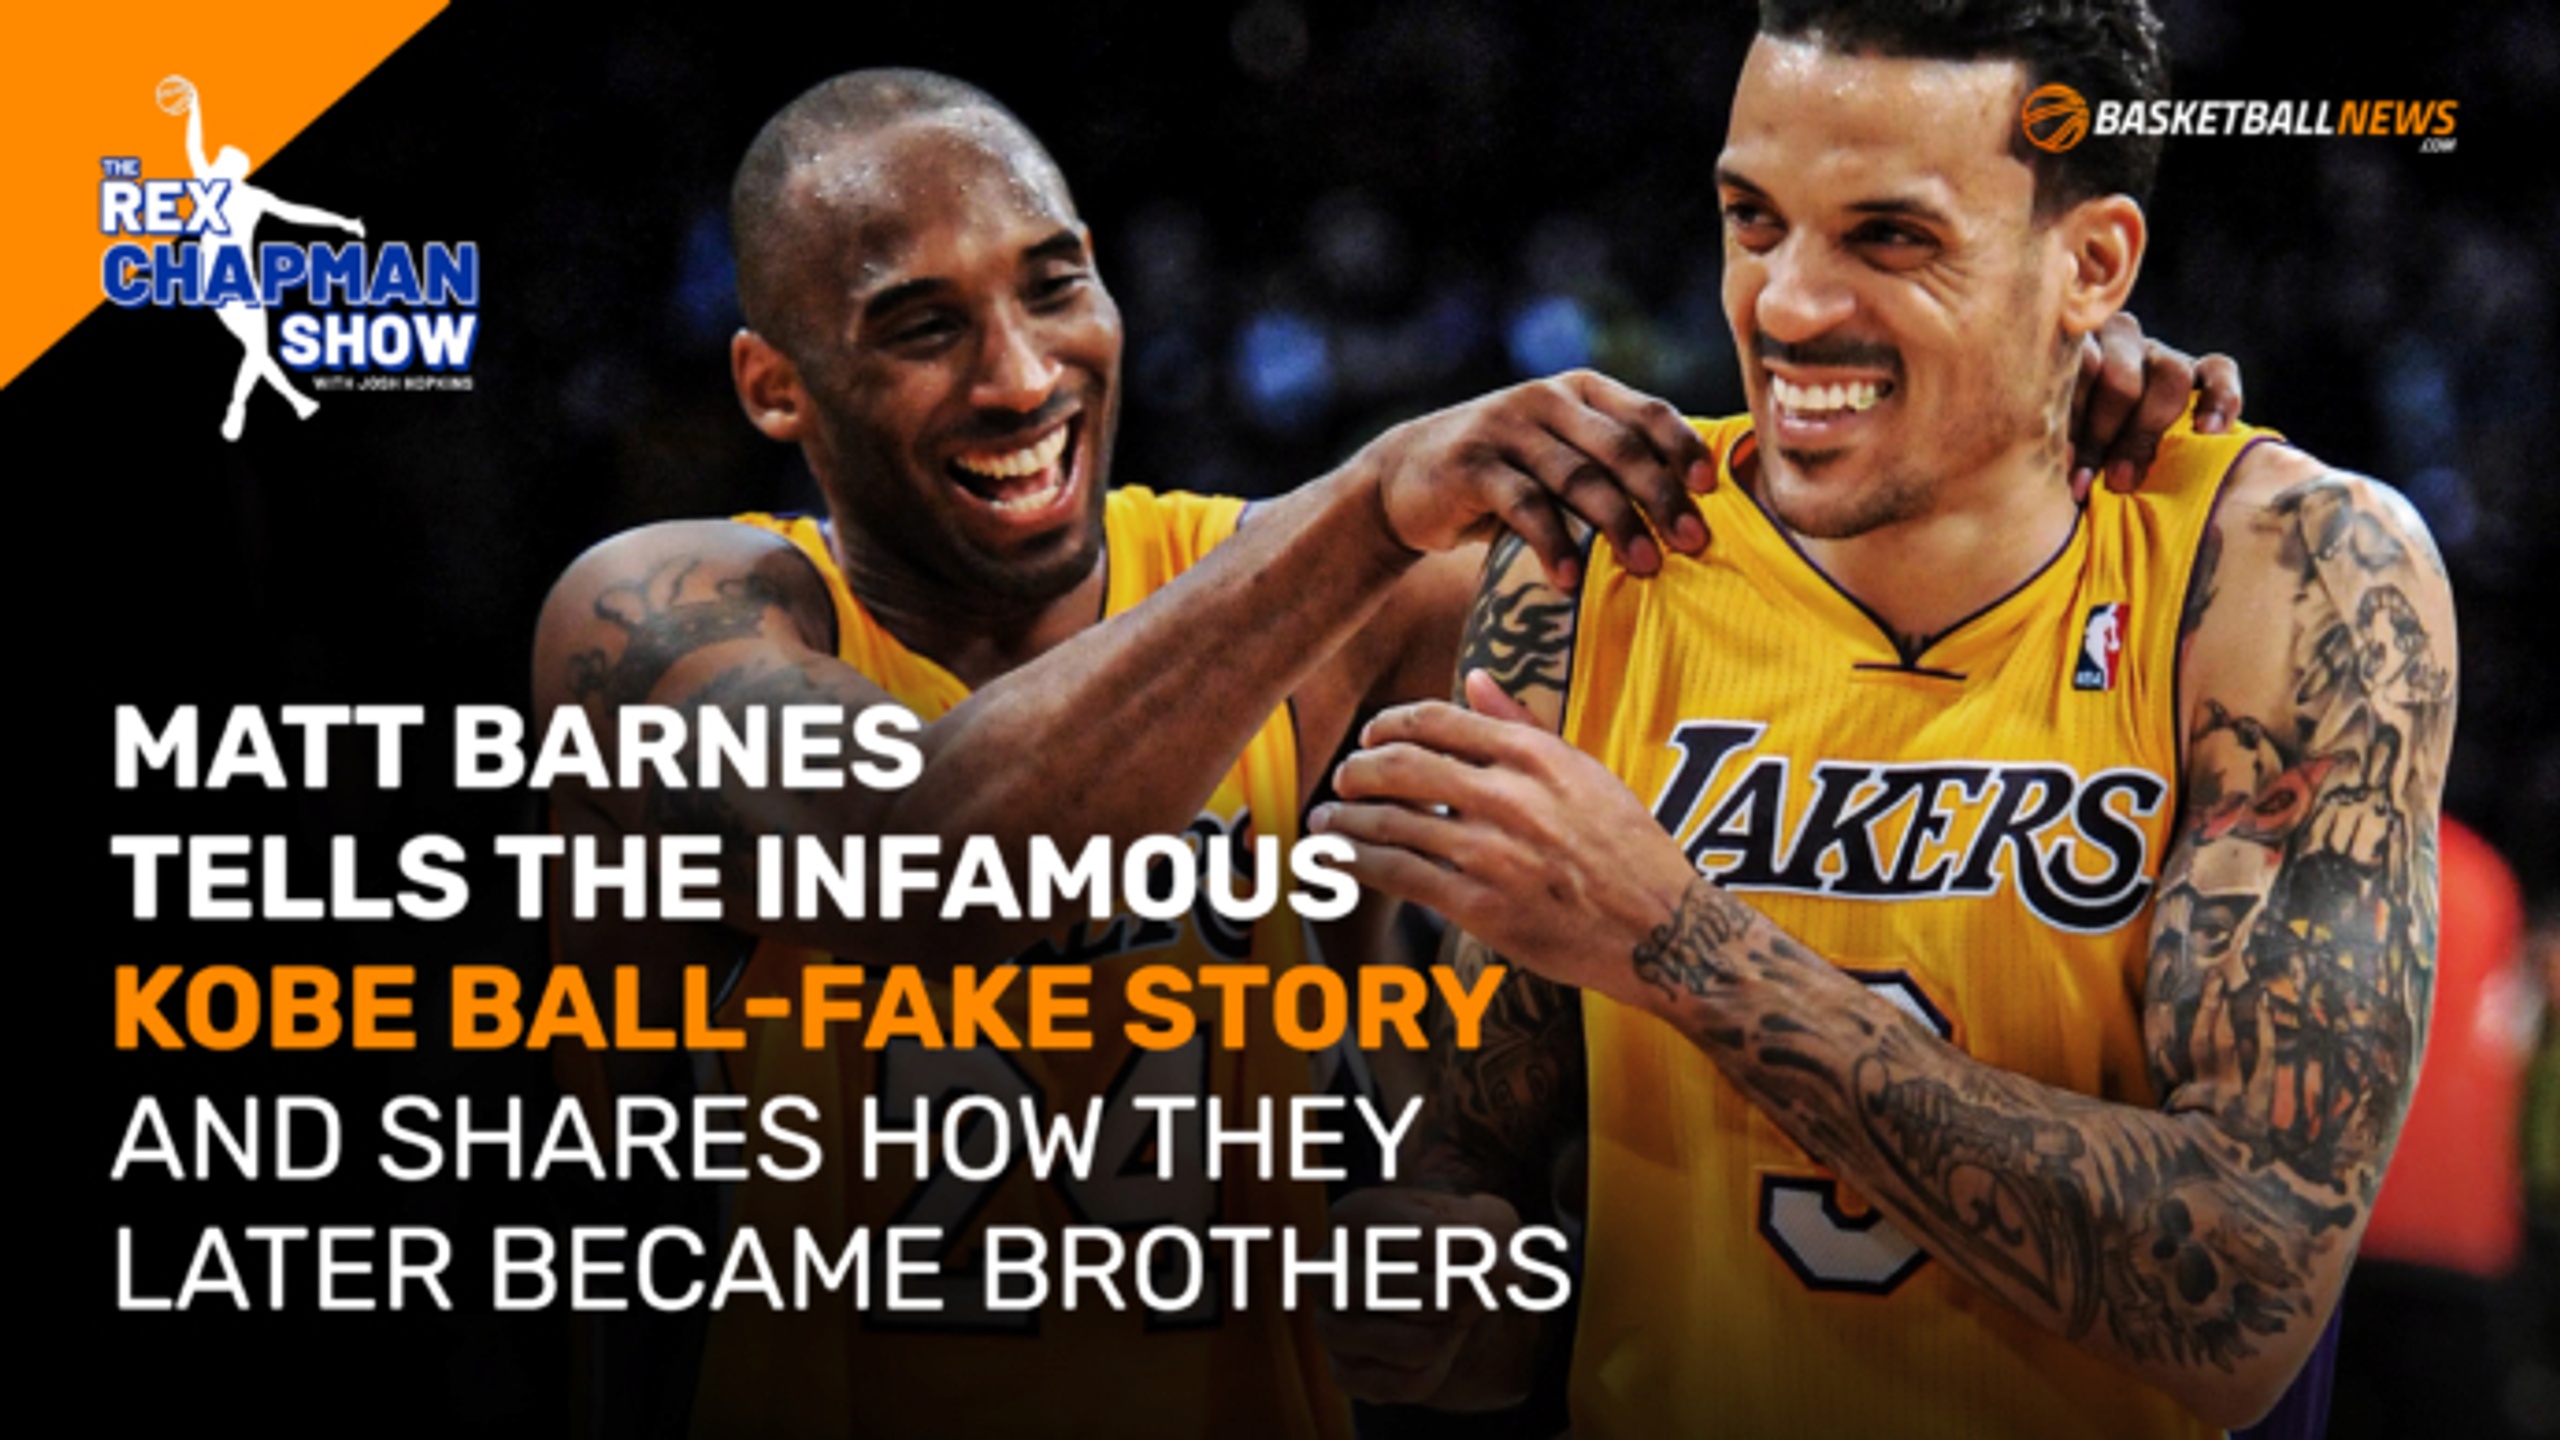 Matt Barnes tells the infamous Kobe Bryant ball-fake story